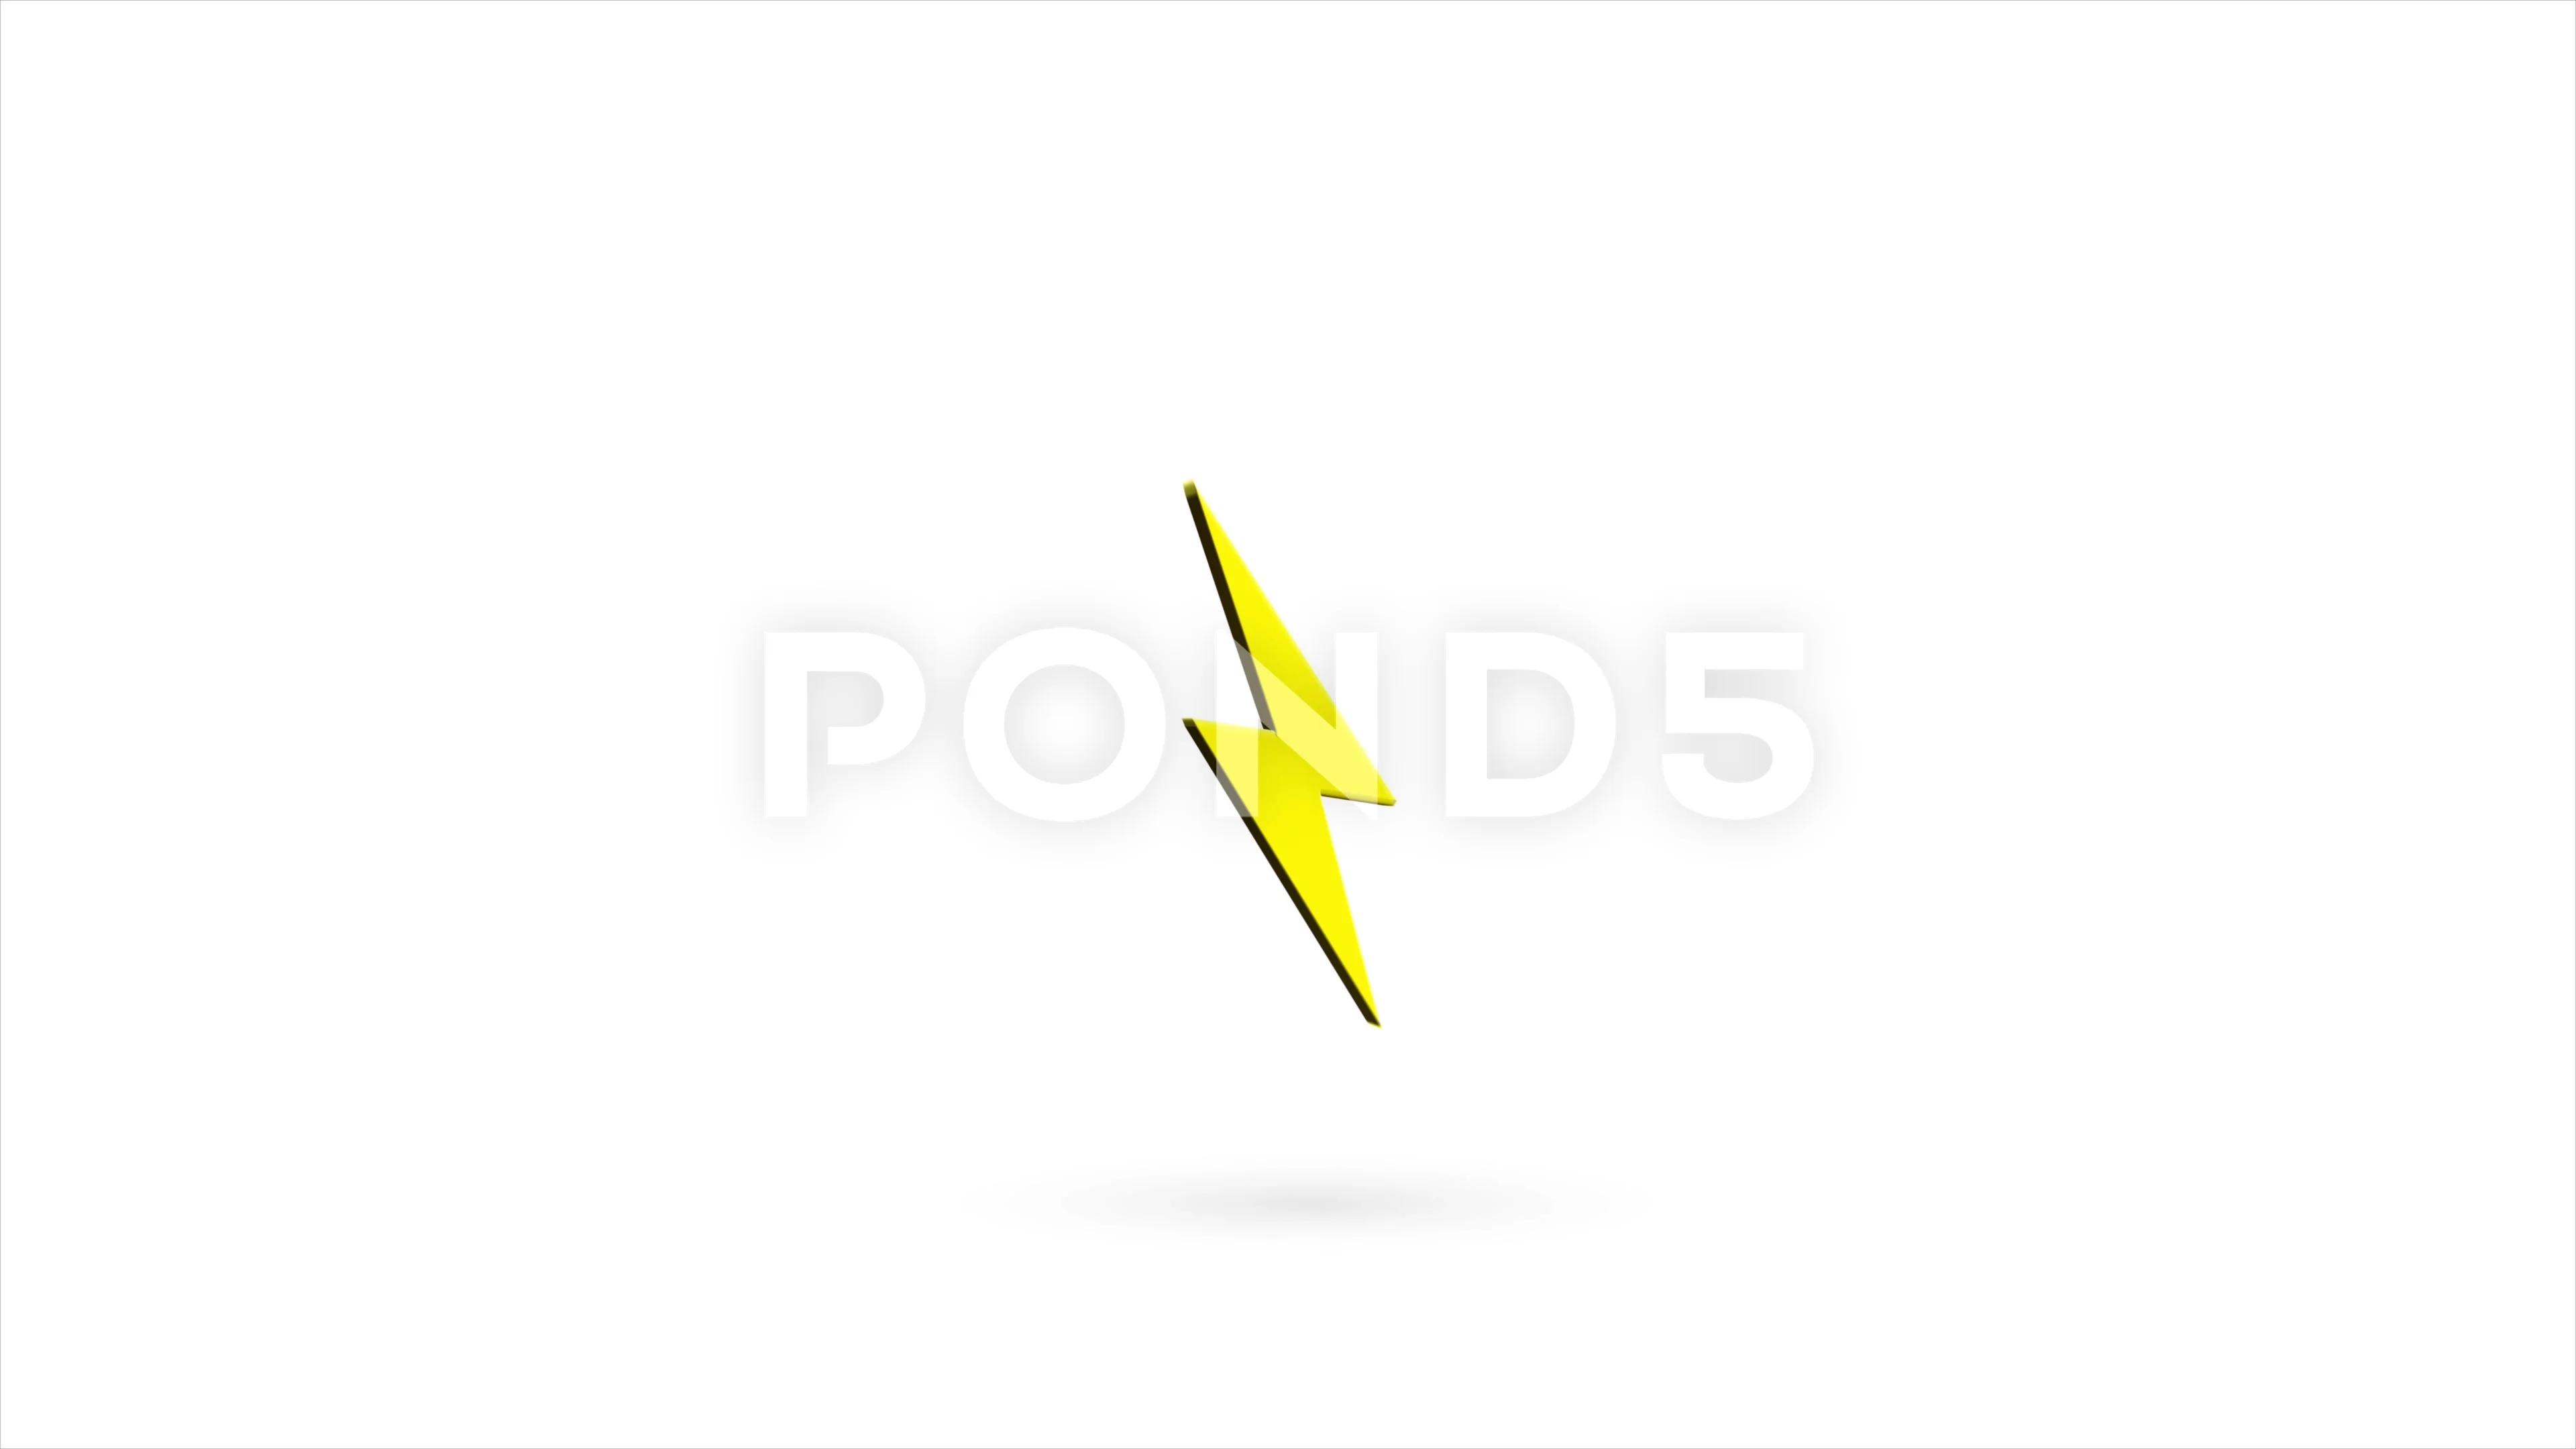 animated lightning bolt